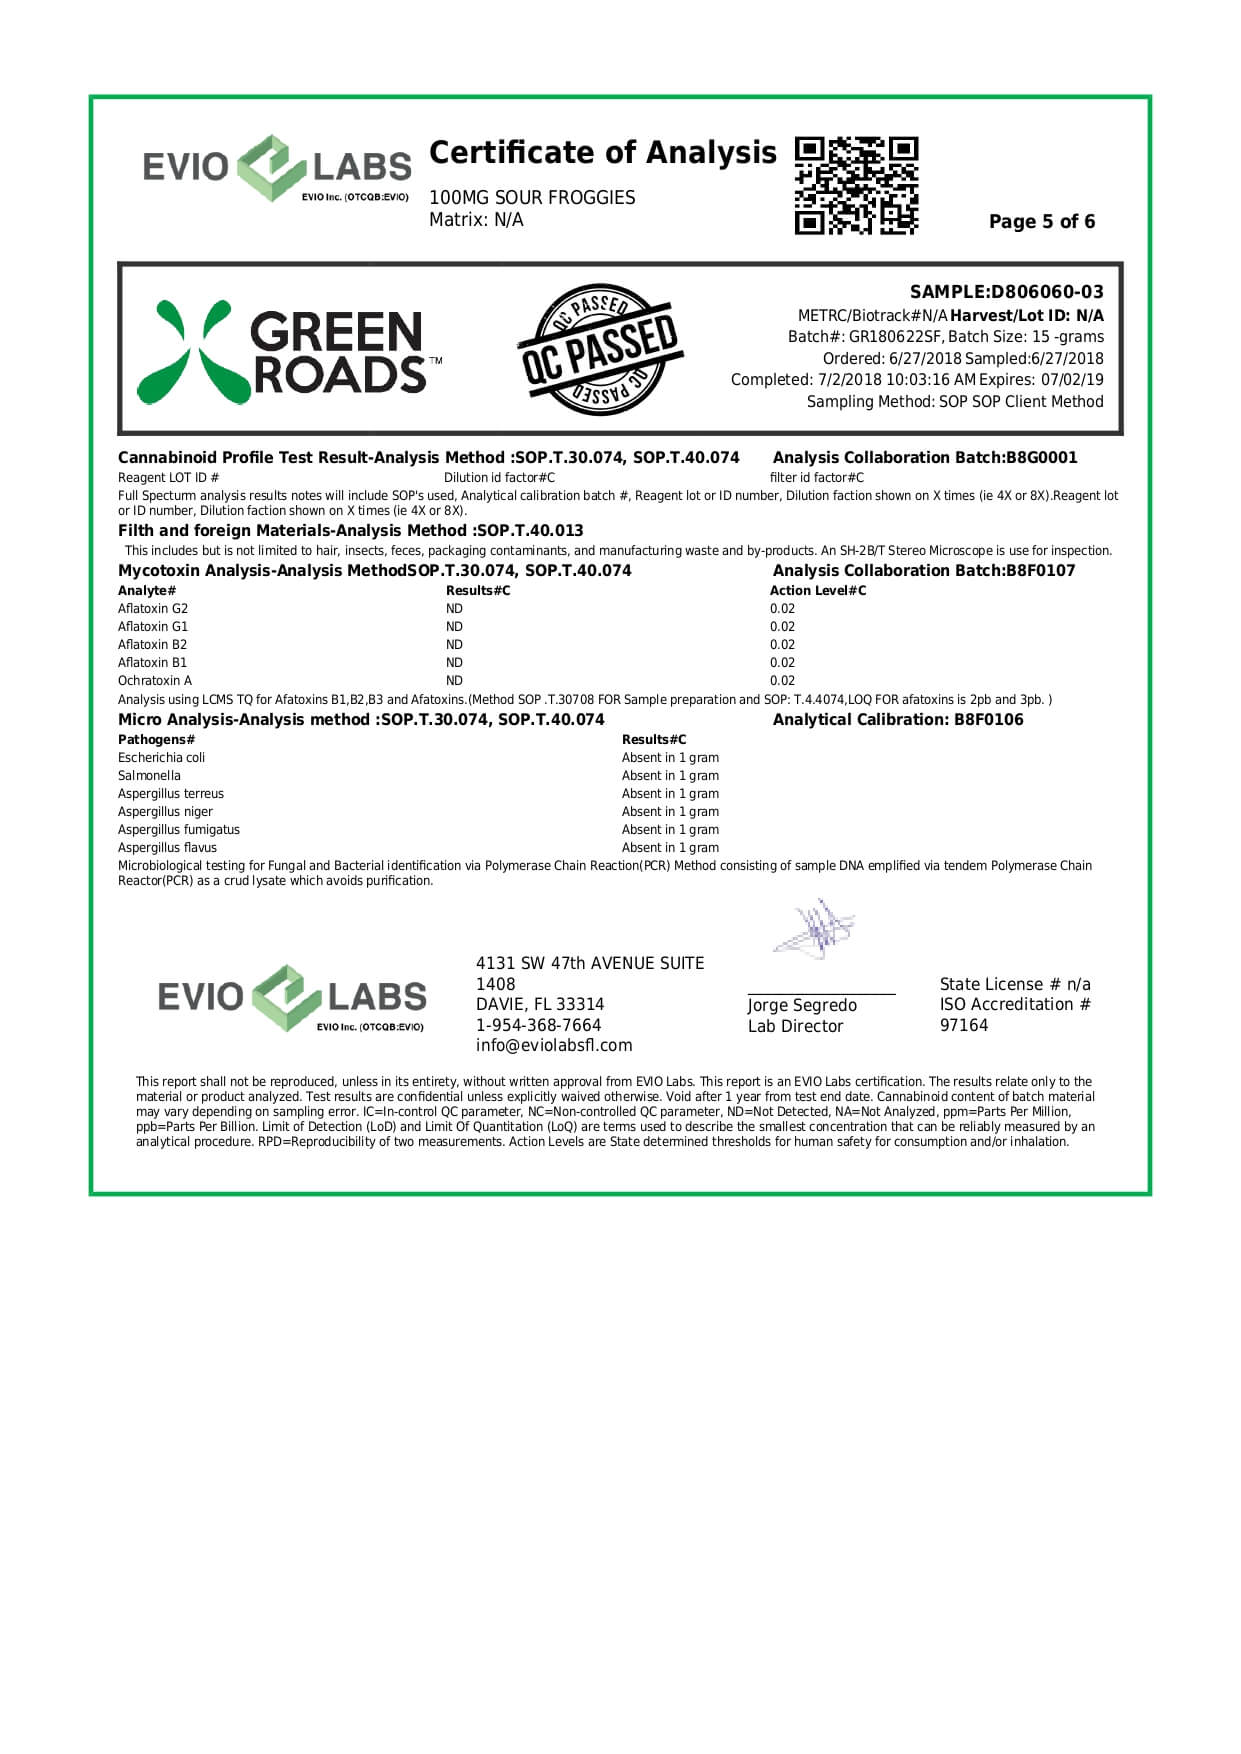 Green Roads CBD Edible Froggies SOURZ 100mg Lab Report